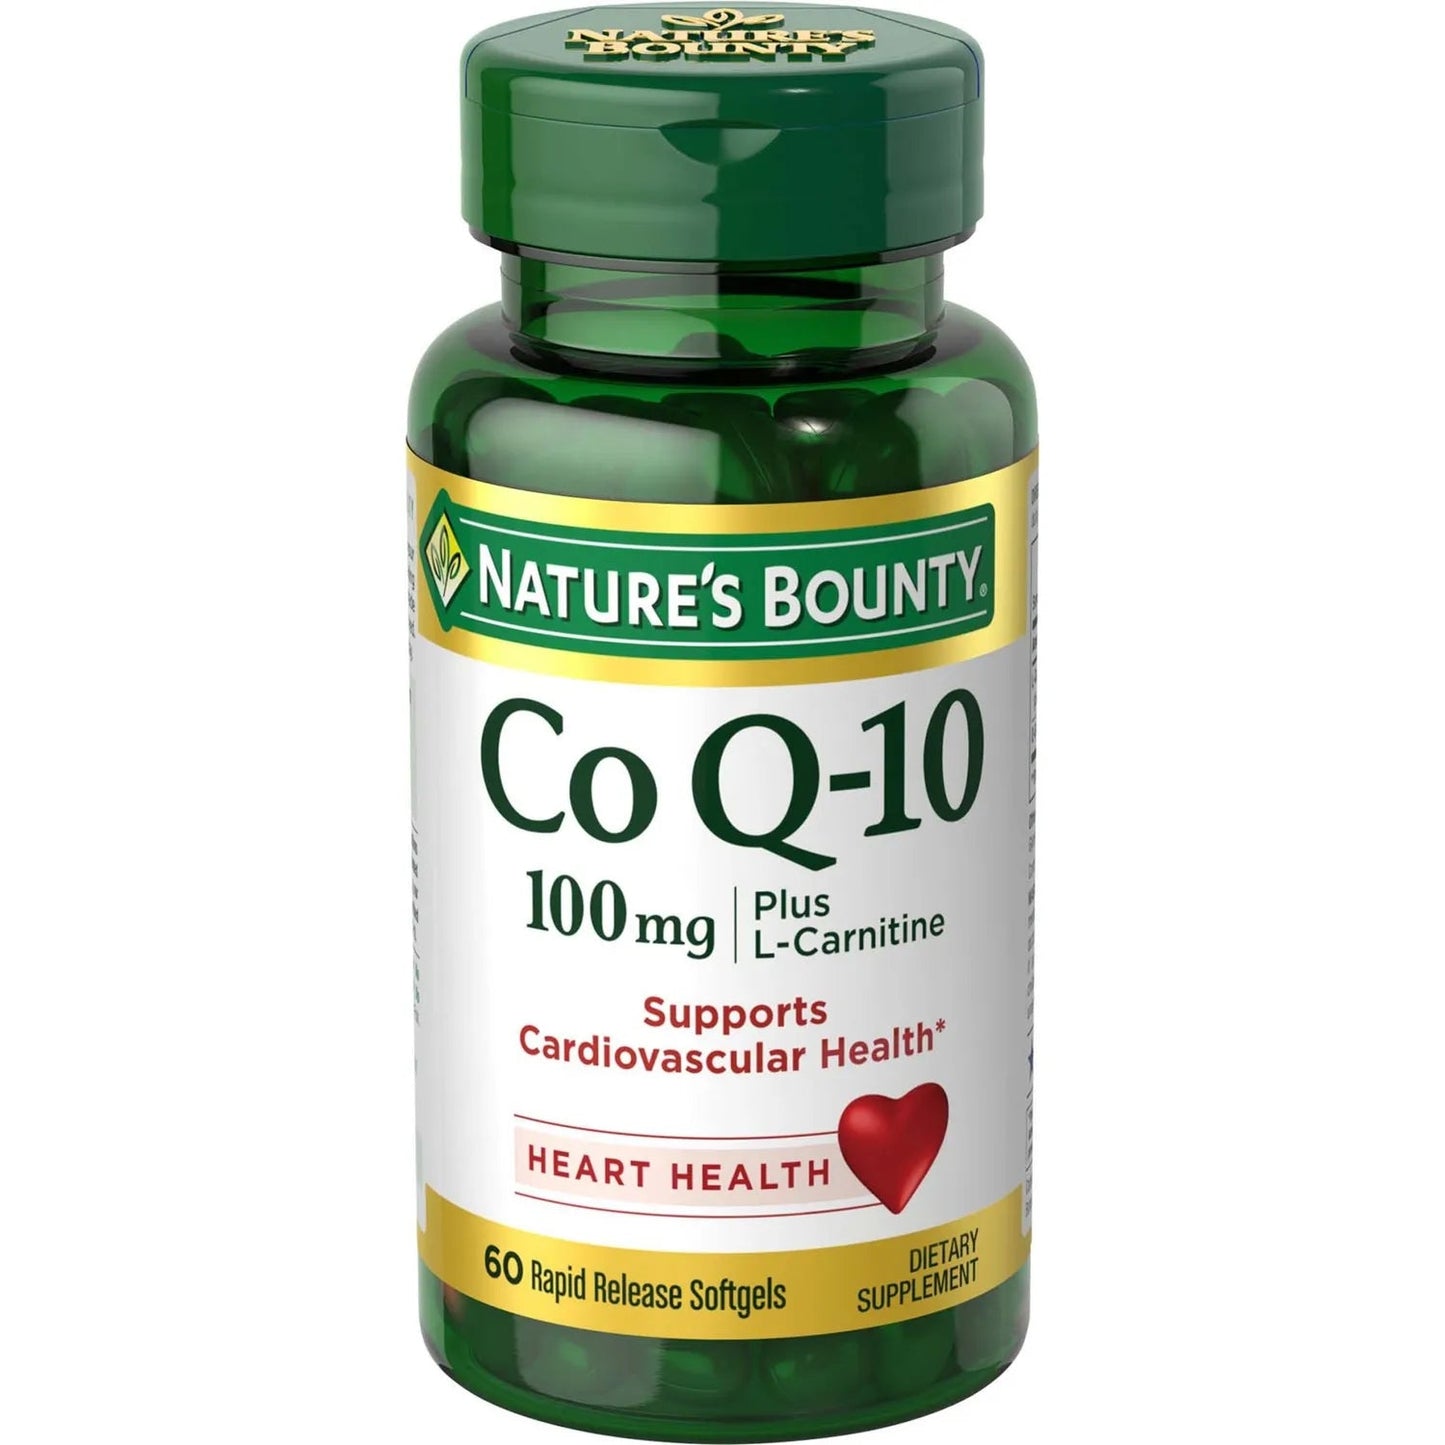 Nature's Bounty Co Q-10 100mg, 60 Softgels - Twin Pack